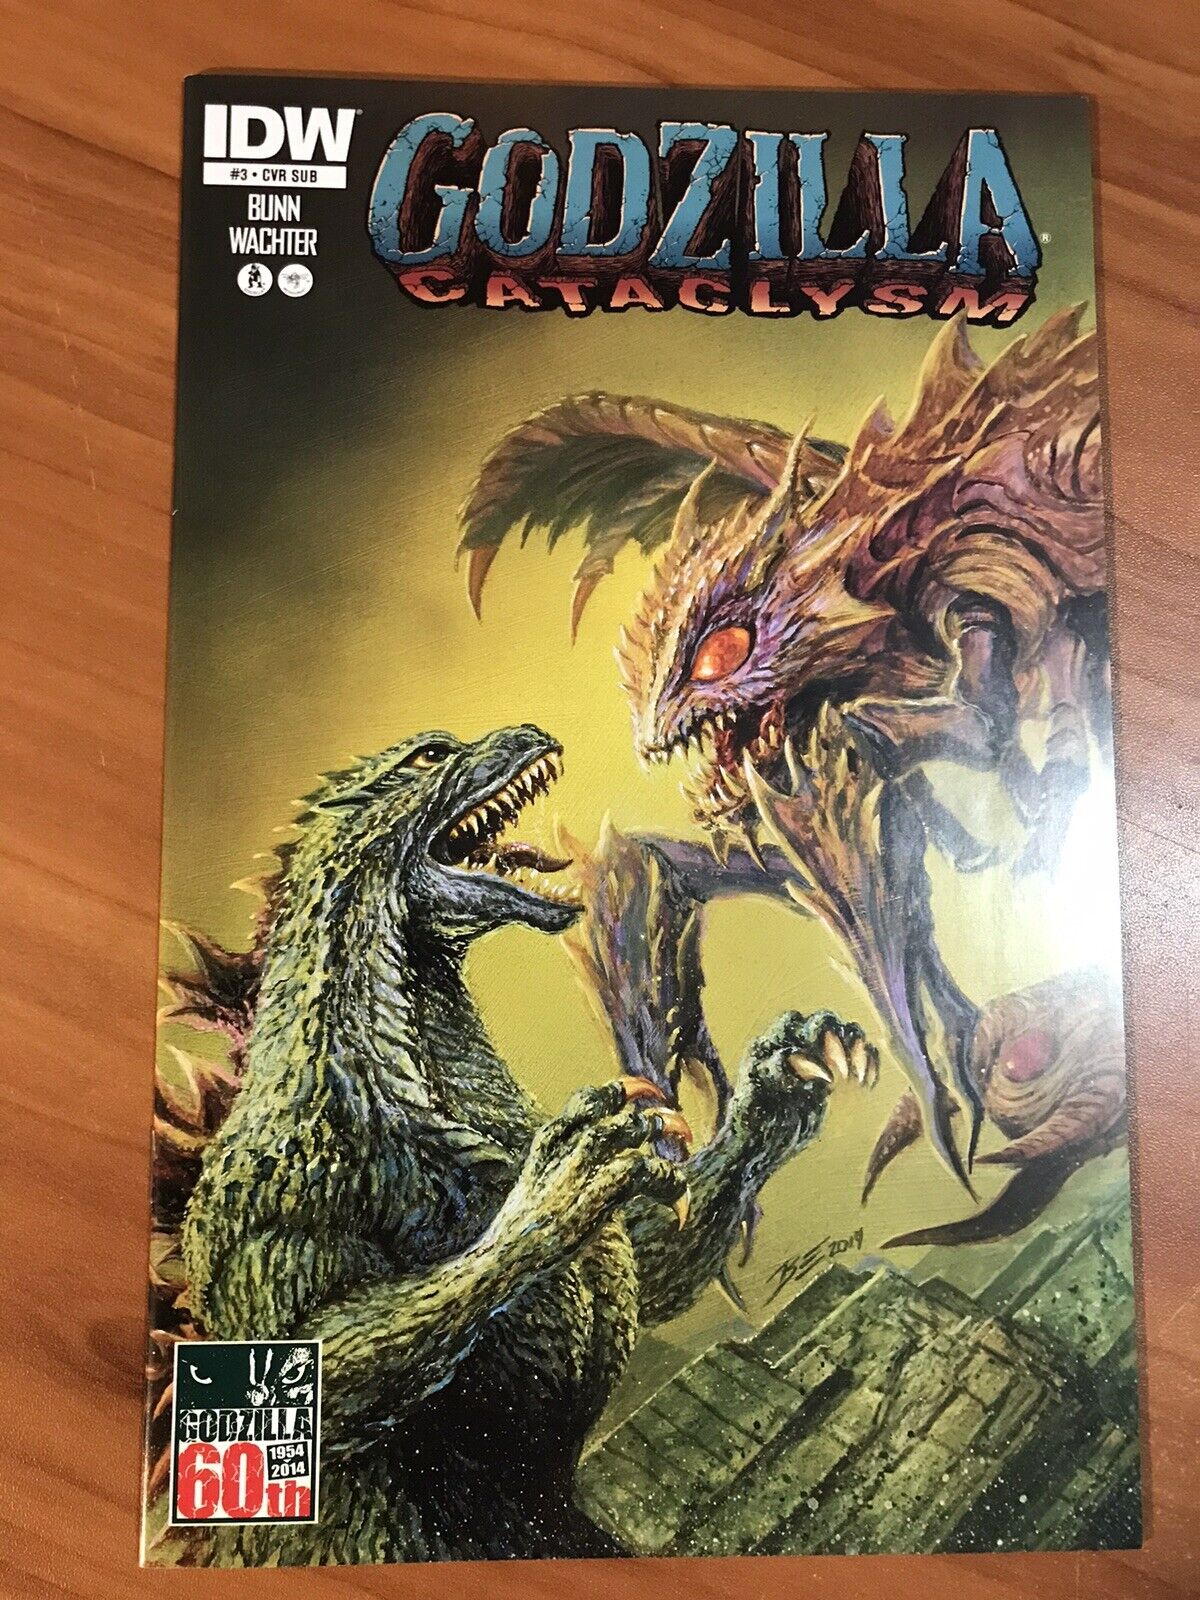 Godzilla: Cataclysm #3 Cover Sub - IDW Publishing